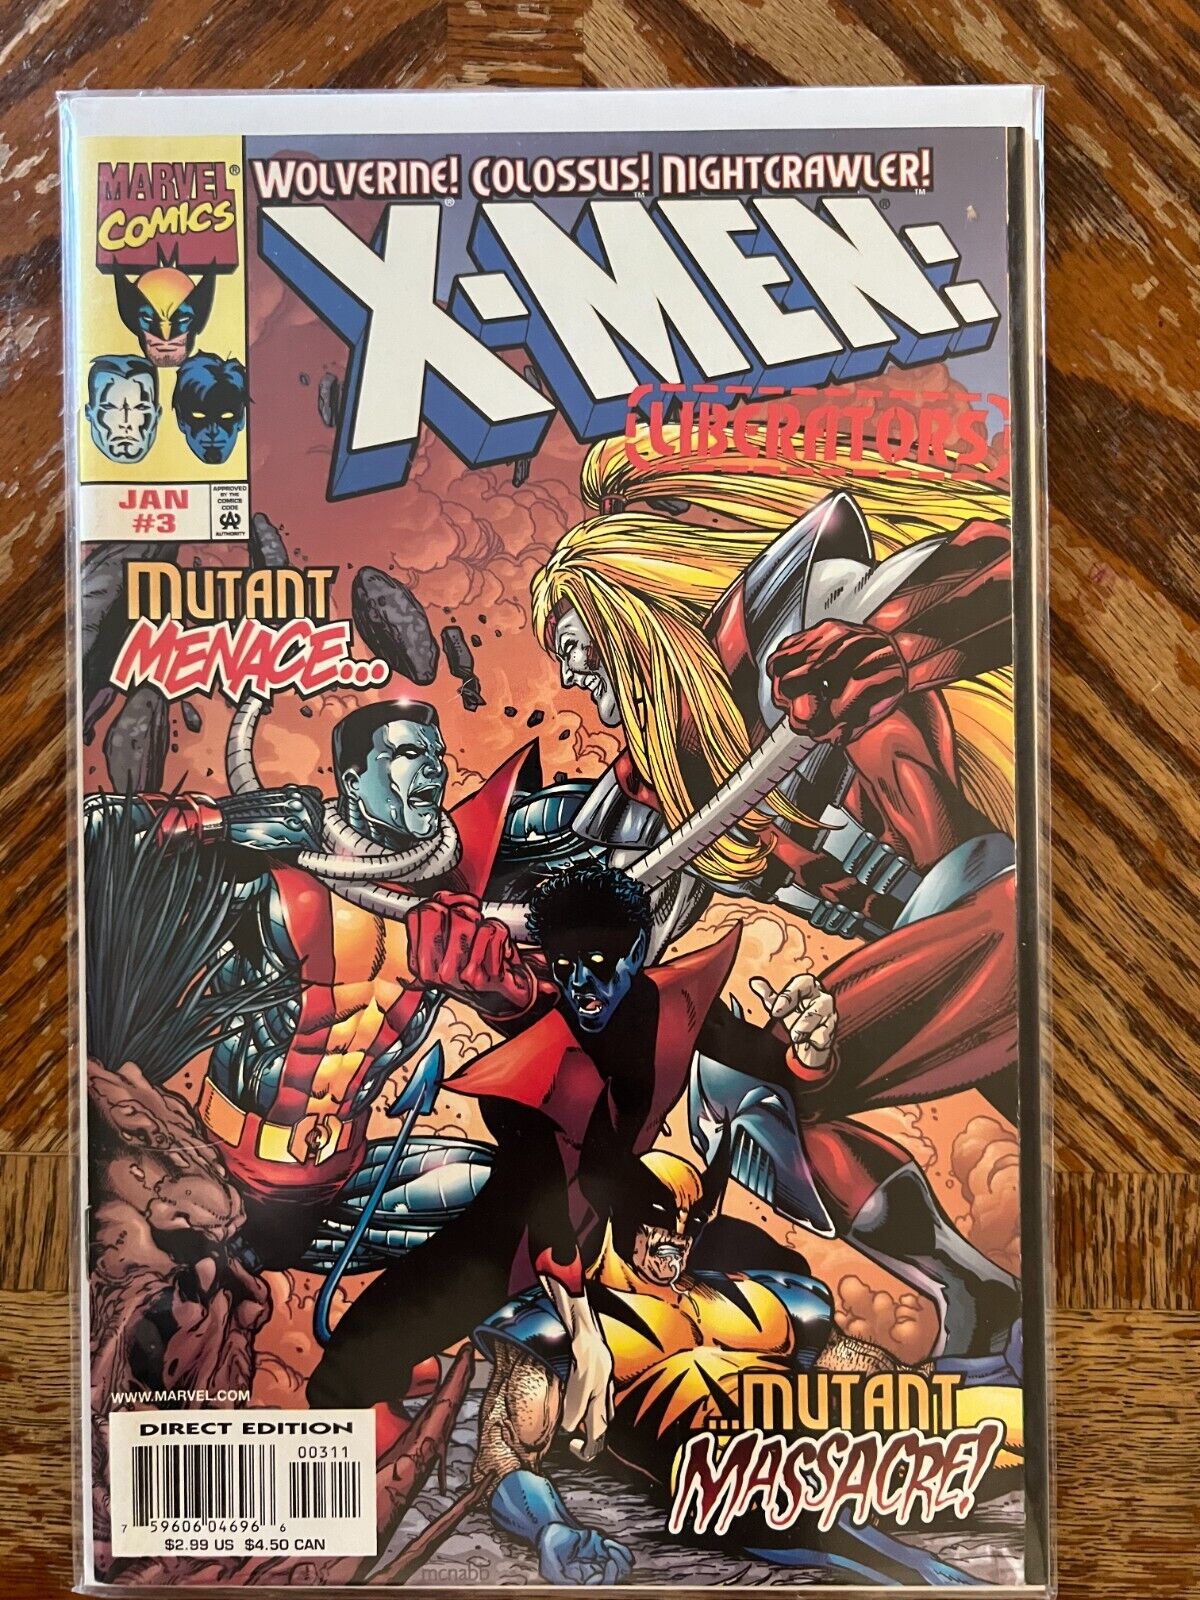 REDUCED FOR QUICK SALE Lot of 7 Marvel Comics X-Men titles